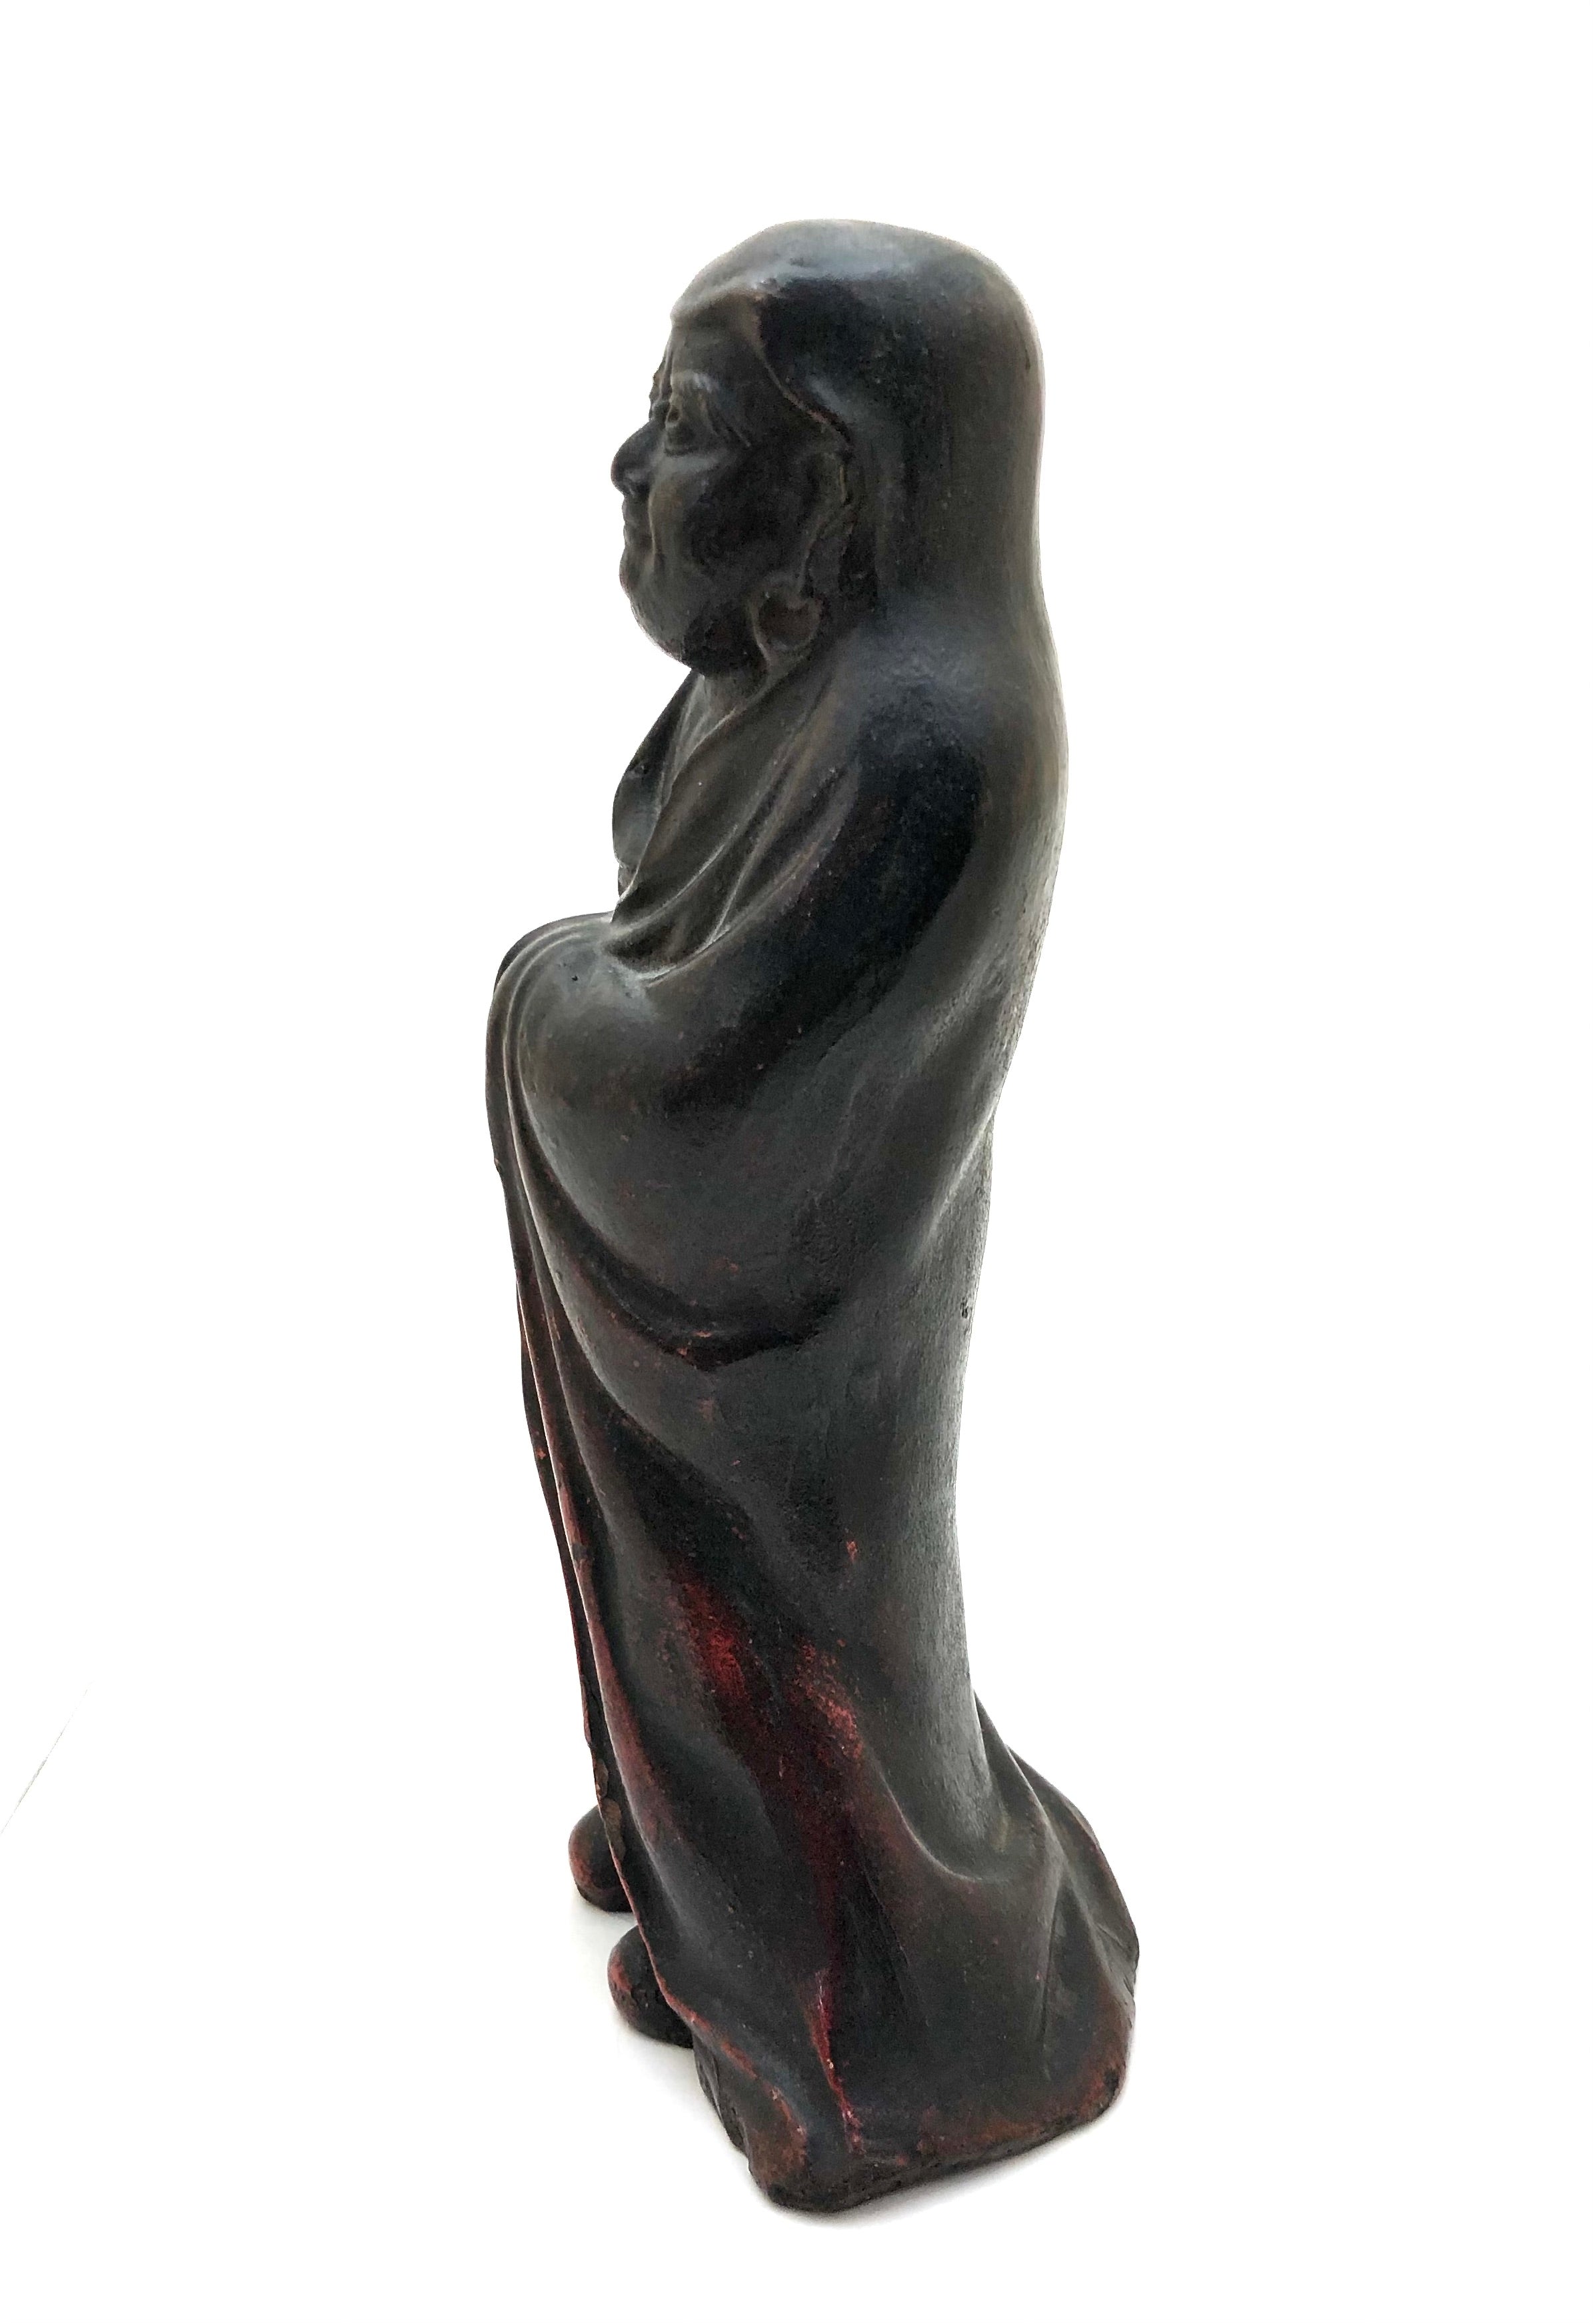 Antique Japanese Bizen Yaki Daruma Okimono In a Standing Mudra Pose | Zen Master Bodhidharma Statue